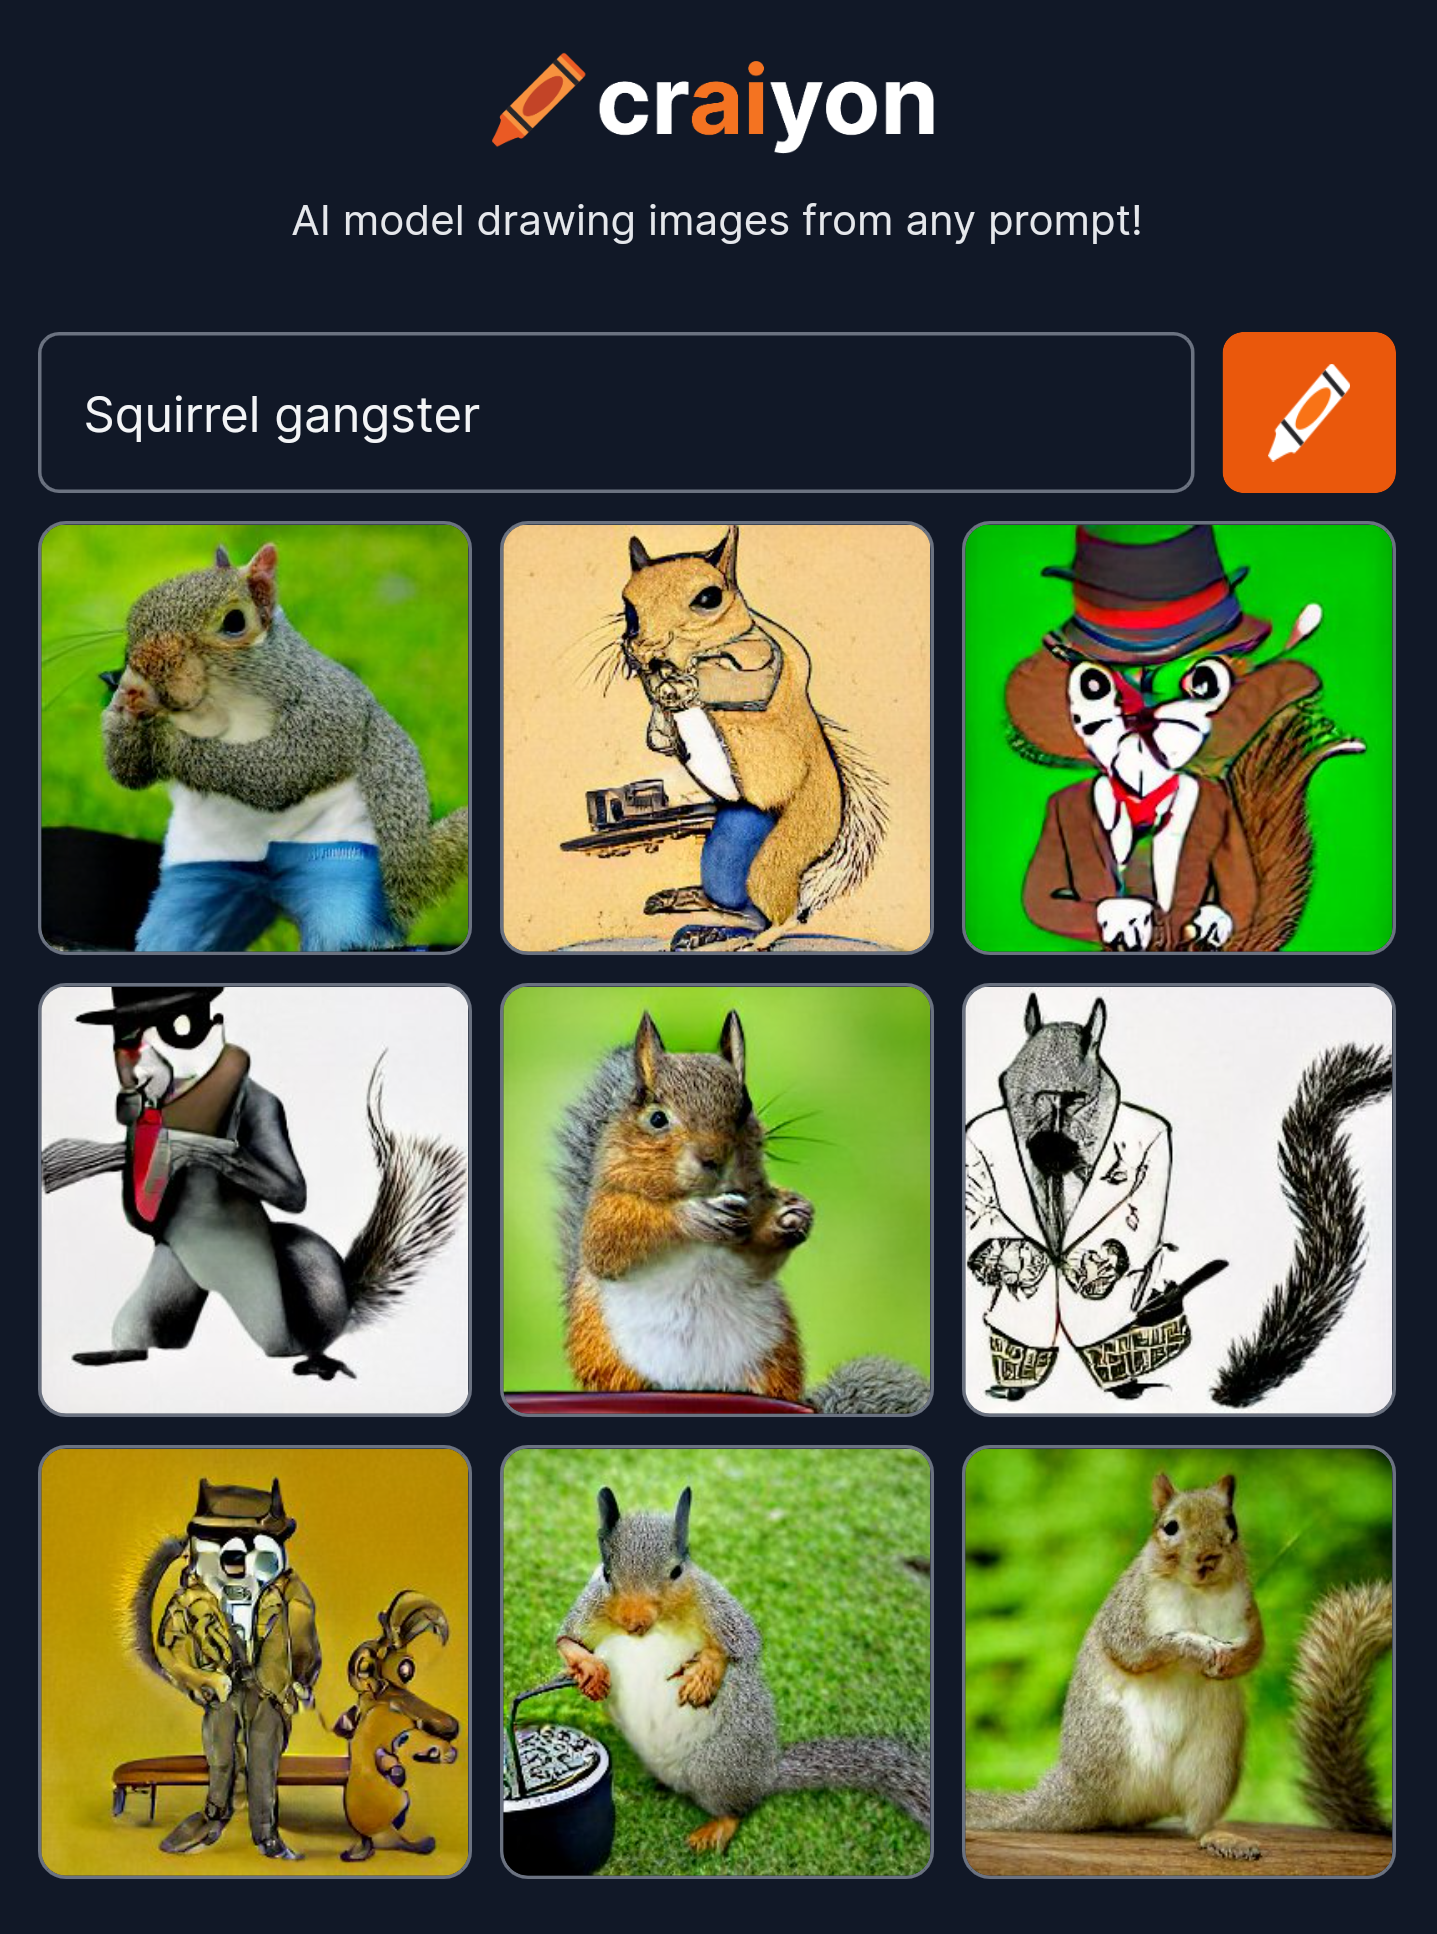 craiyon_033215_Squirrel_gangster.png